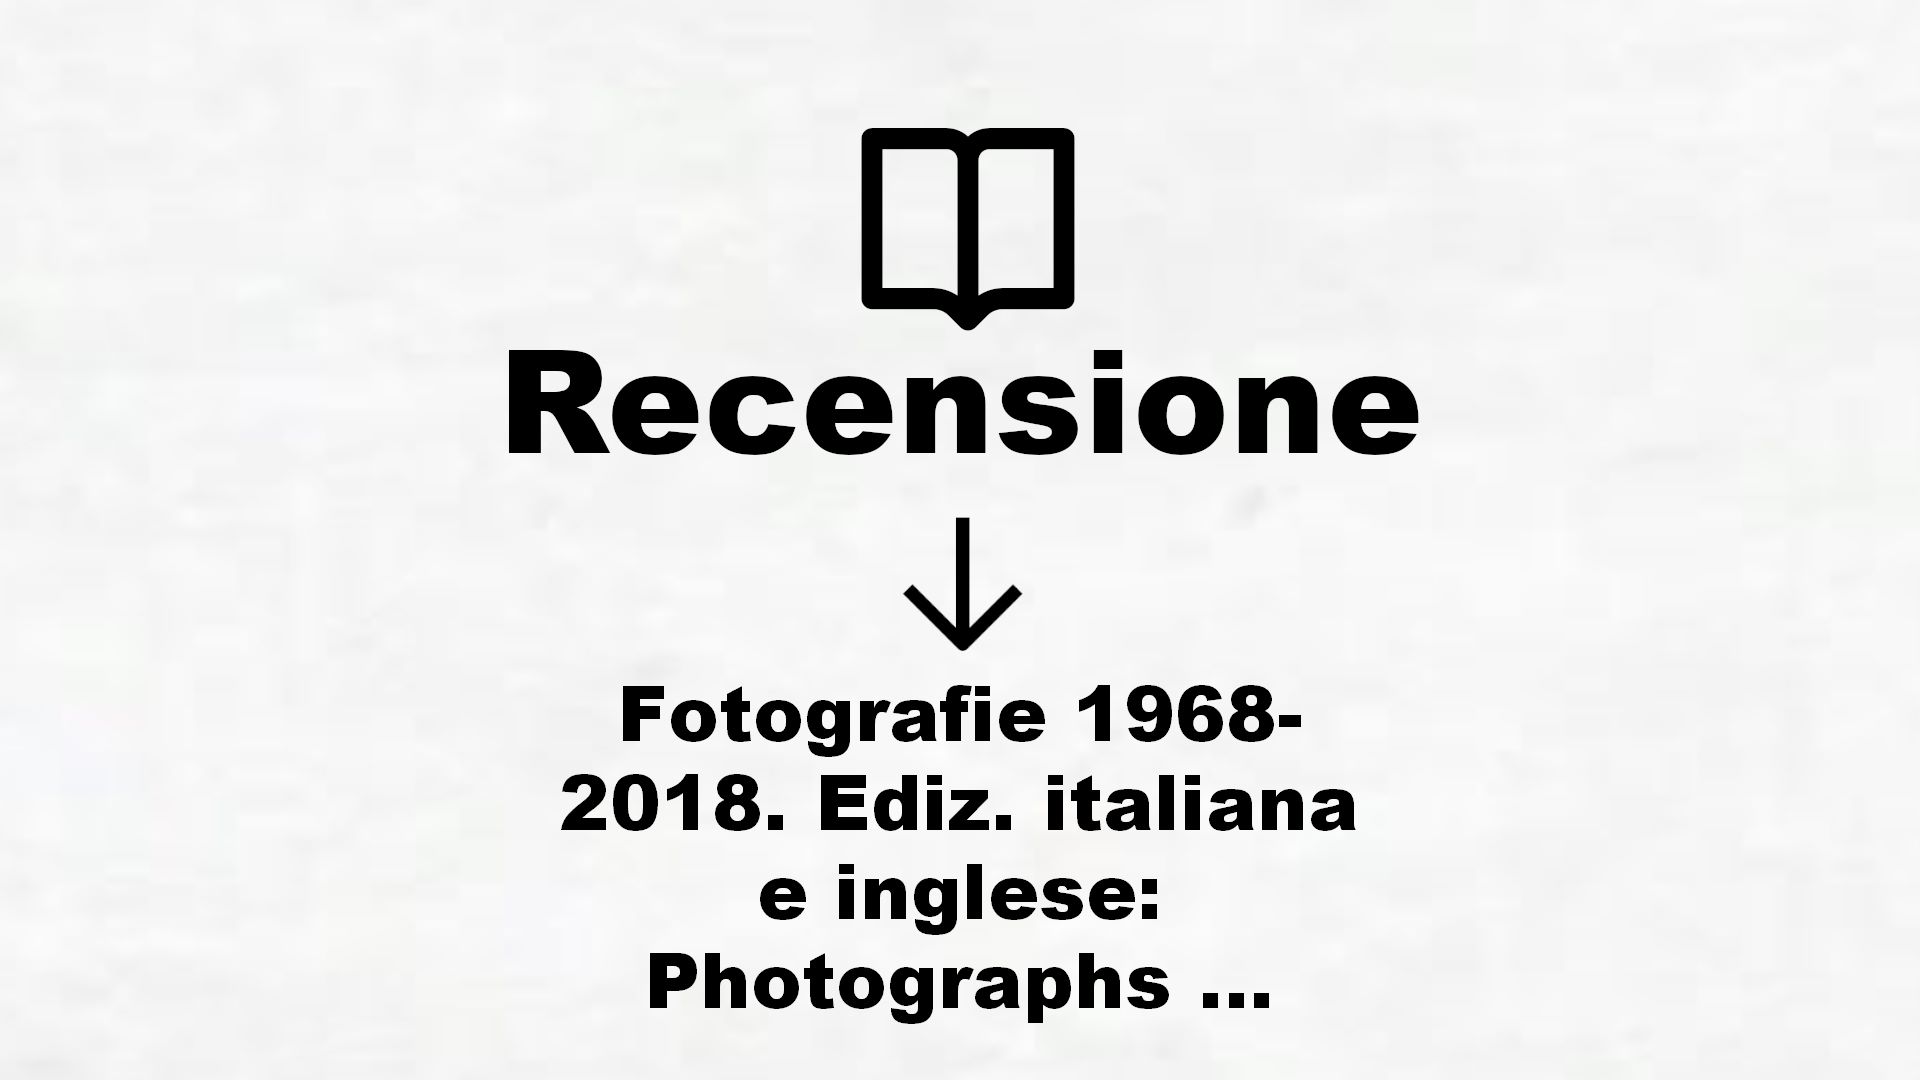 Fotografie 1968-2018. Ediz. italiana e inglese: Photographs 1968-2018 – Recensione Libro